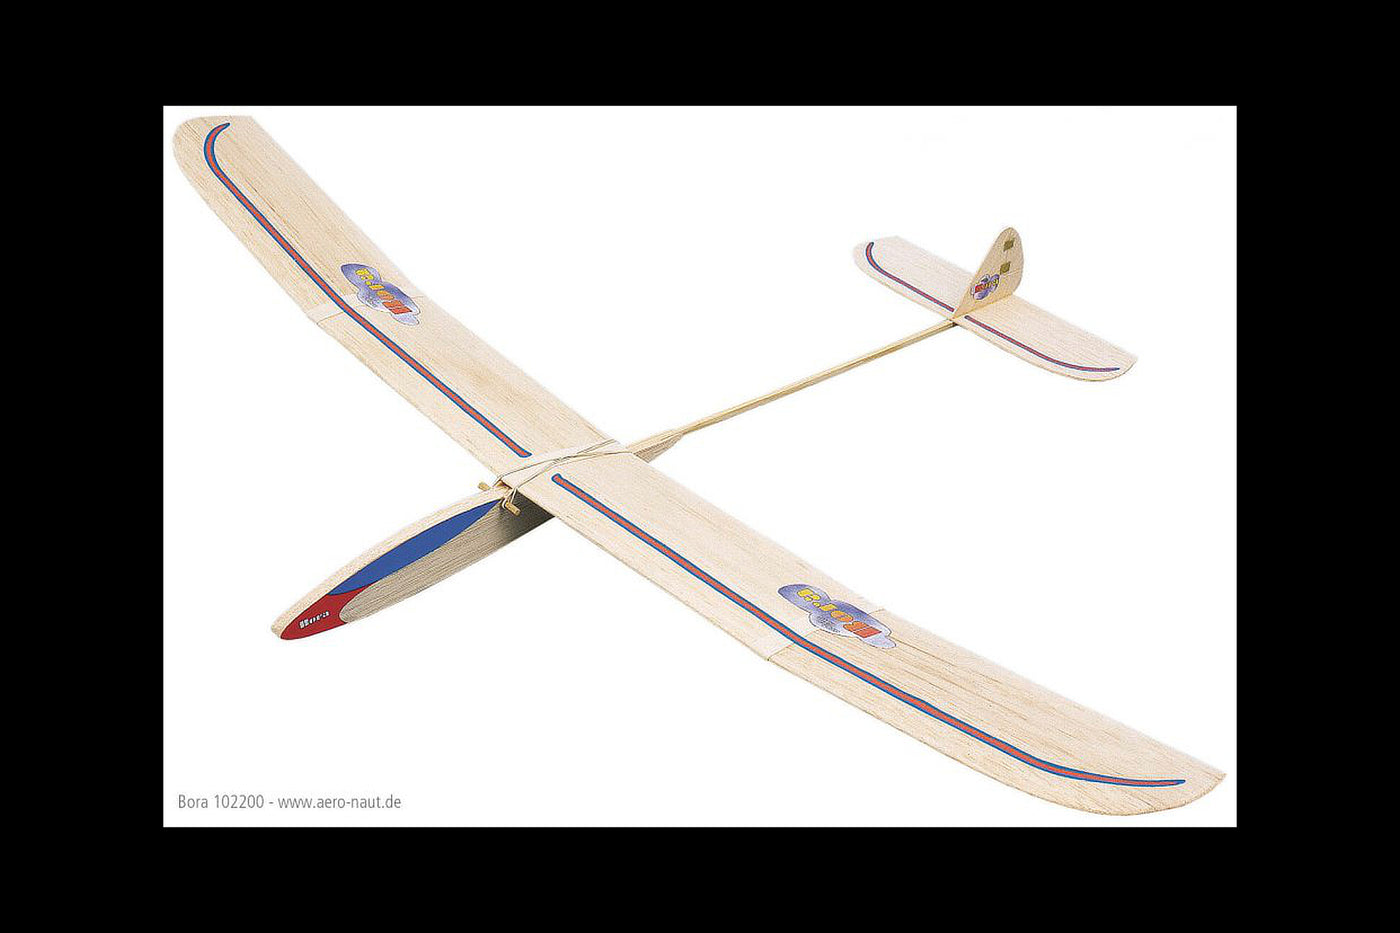 Aeronaut Bora Free Flight Towline Glider